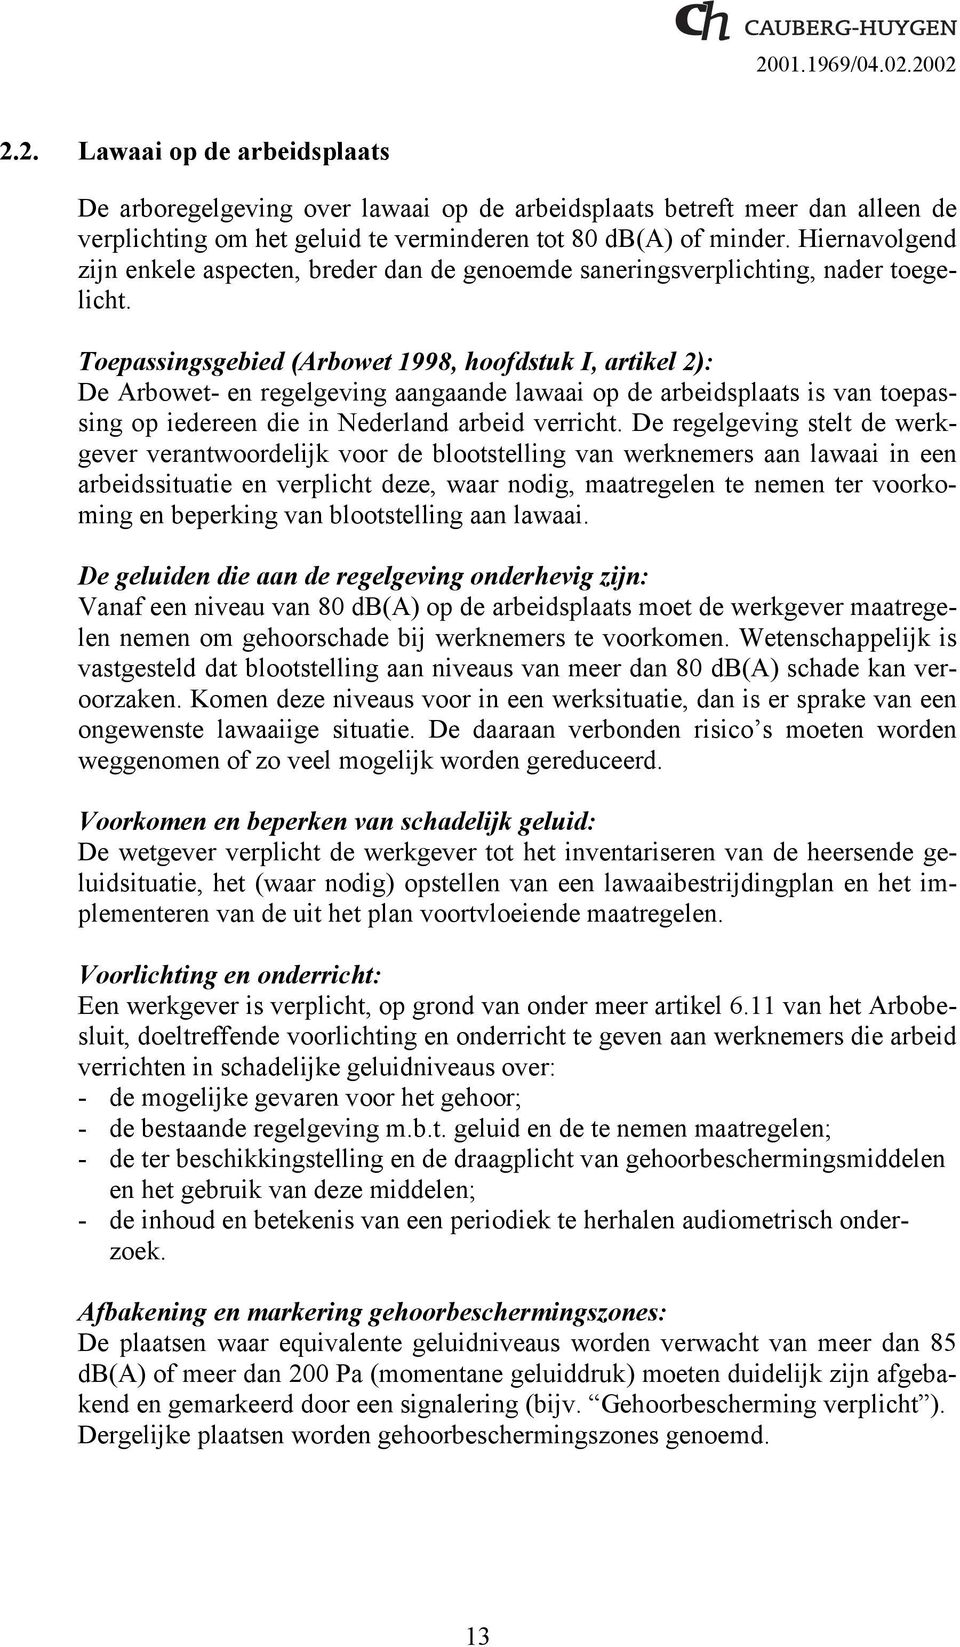 Toepassingsgebied (Arbowet 1998, hoofdstuk I, artikel 2): De Arbowet- en regelgeving aangaande lawaai op de arbeidsplaats is van toepassing op iedereen die in Nederland arbeid verricht.